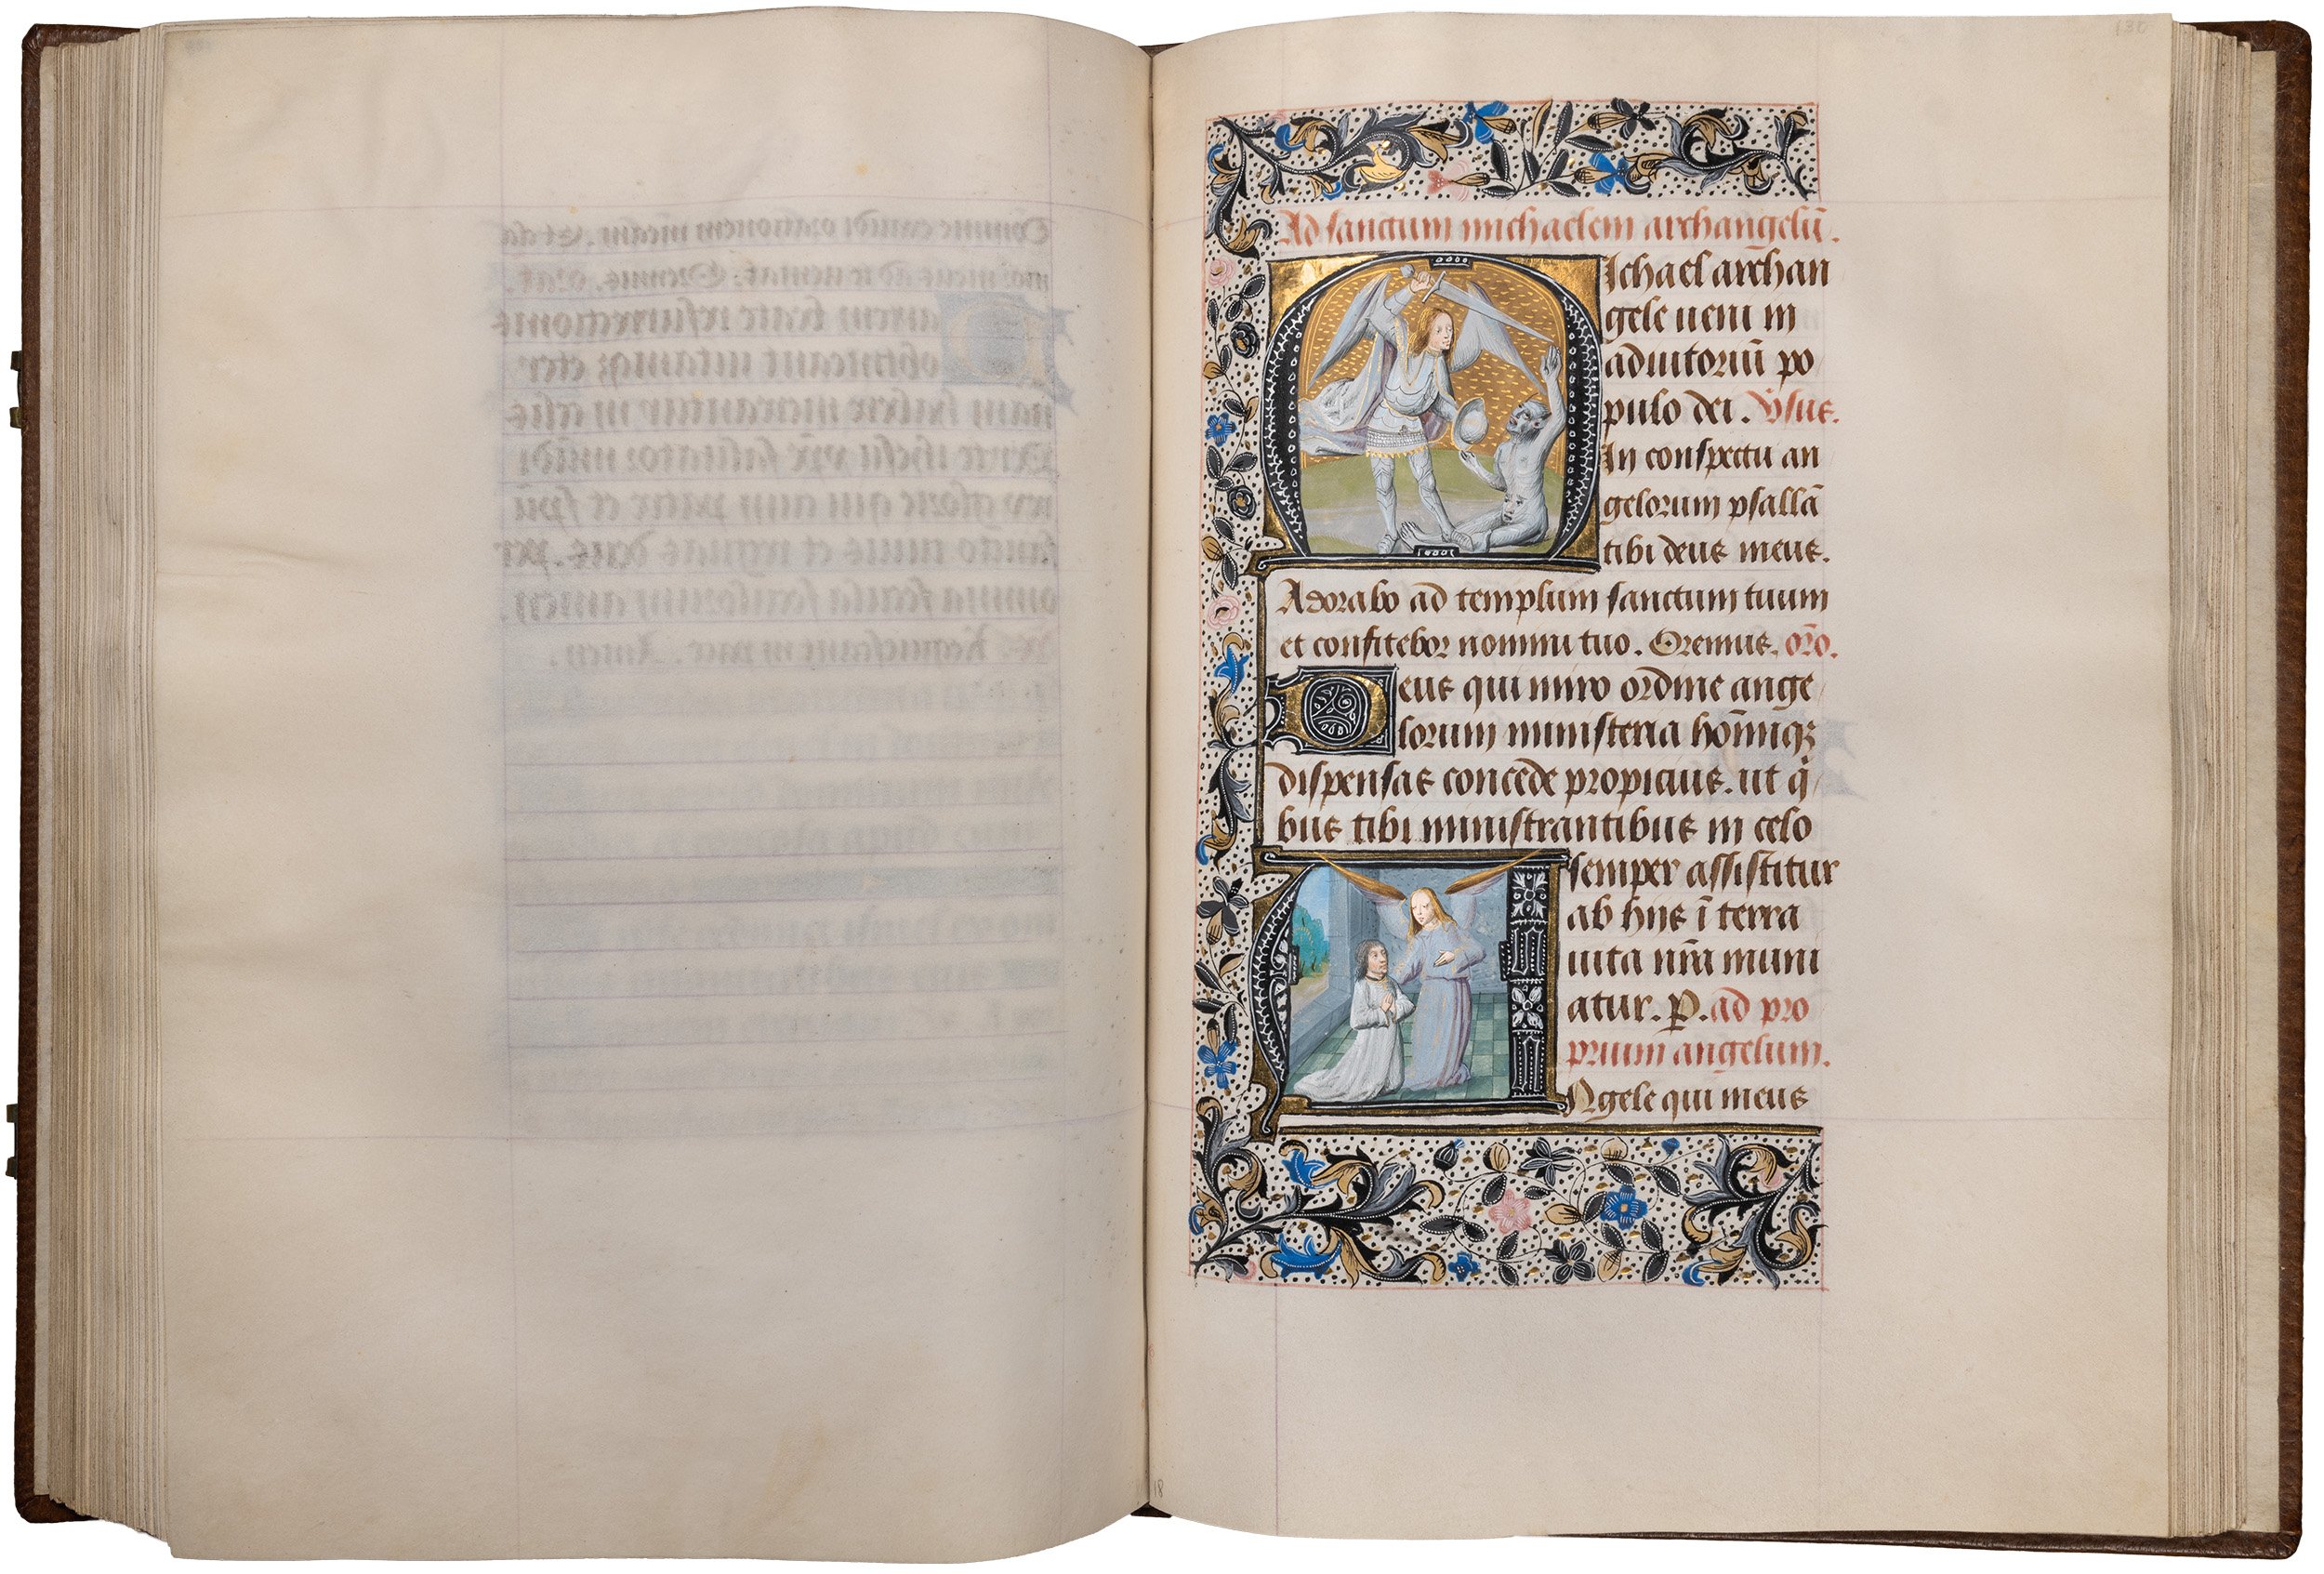 Book-of-hours-claude-toulongeon-grisaille-order-golden-fleece-bruges-edward-iv-folio-33.jpg